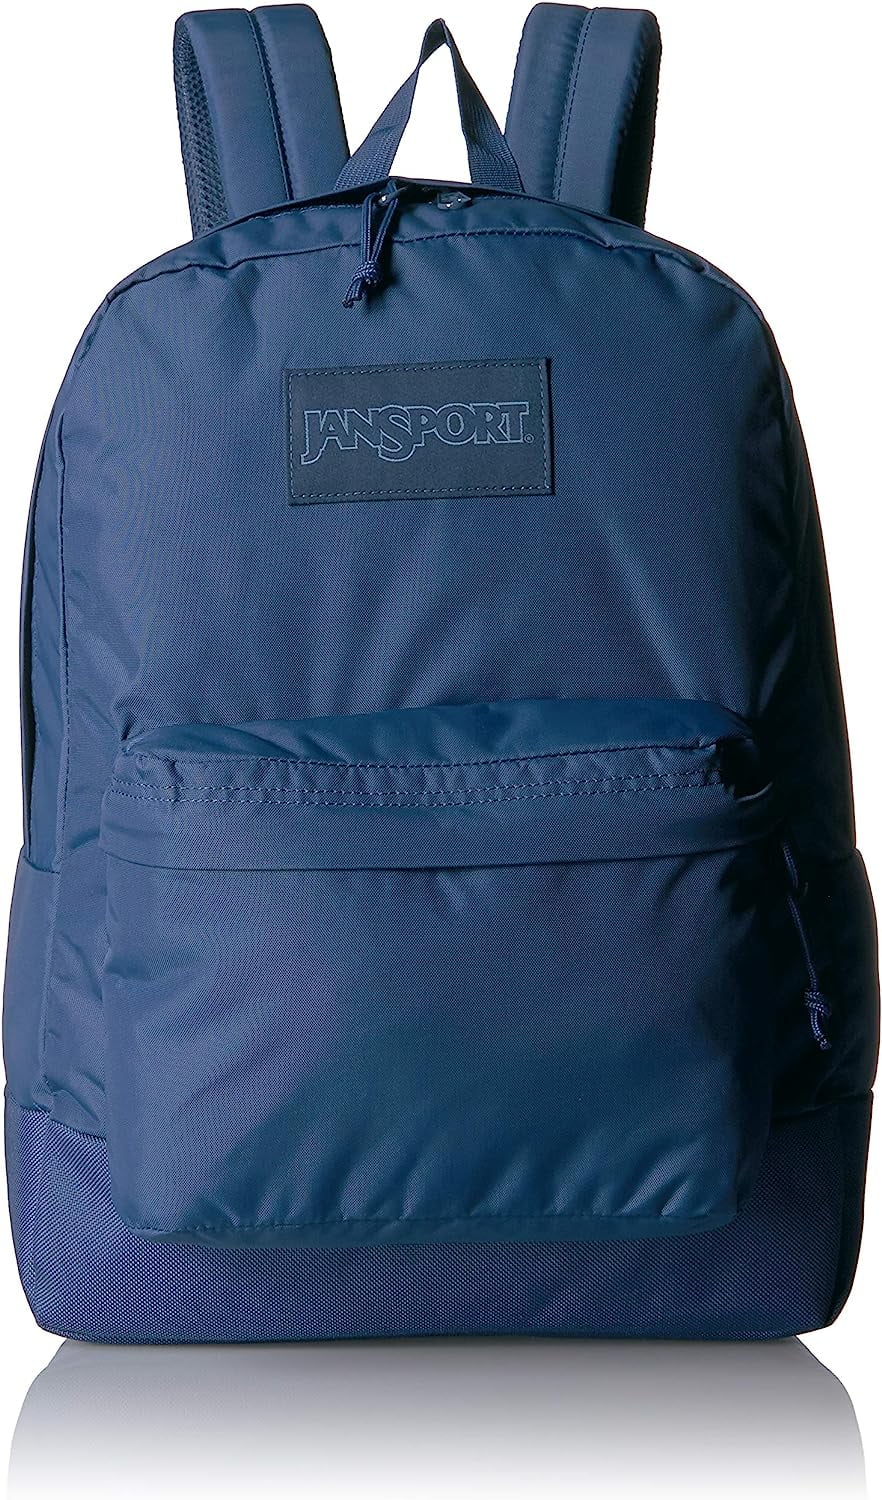 Jansport Backpack Superbreak Mono Dark Denim Blue - Walmart.com